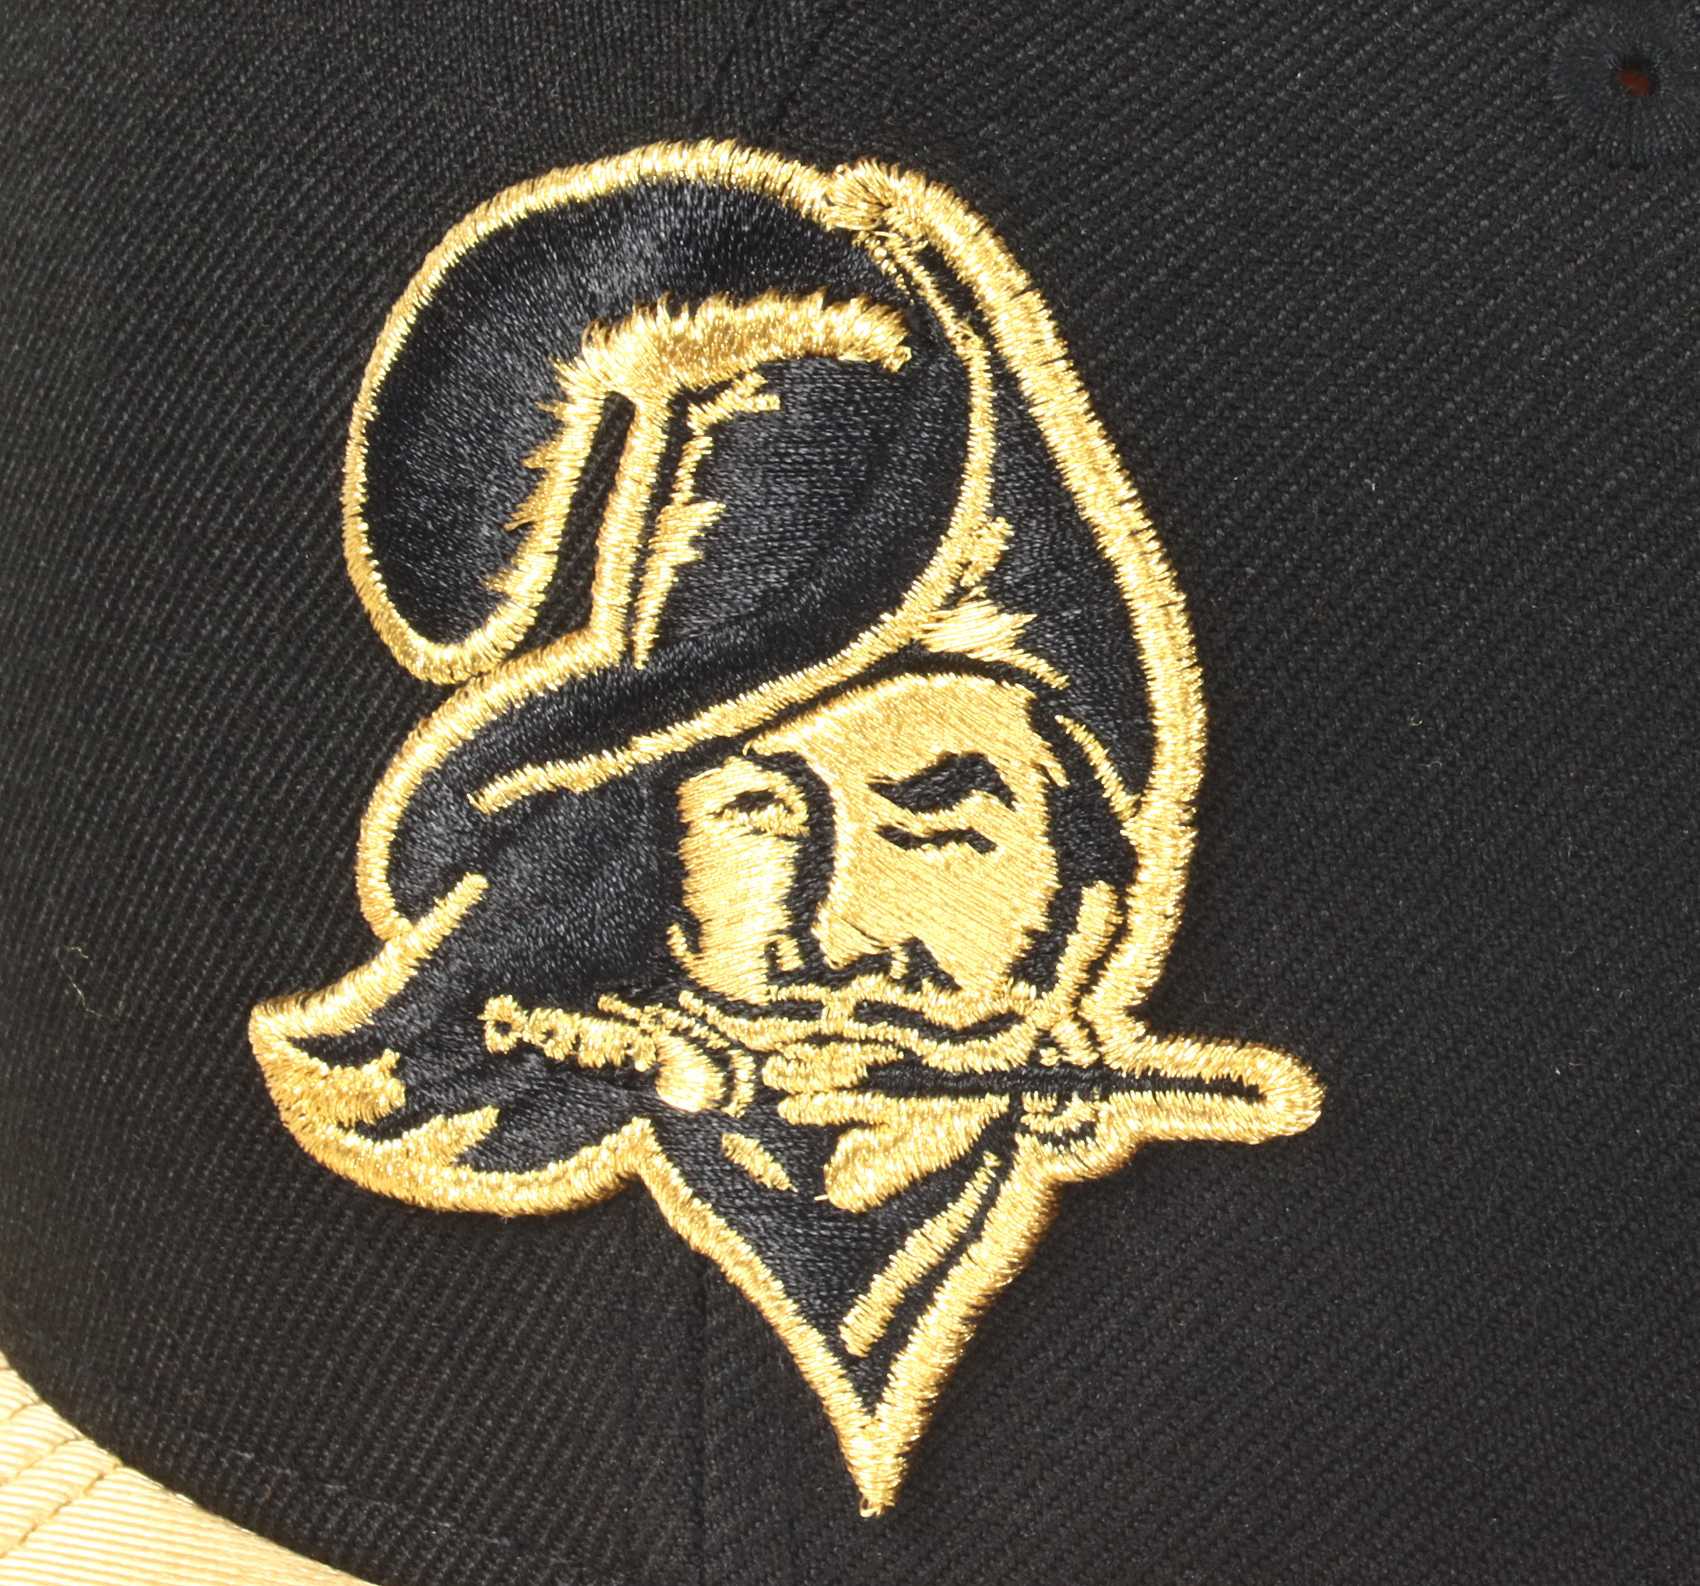 Tampa Bay Buccaneers Gold Logo 9Fifty OF Snapback Cap New Era